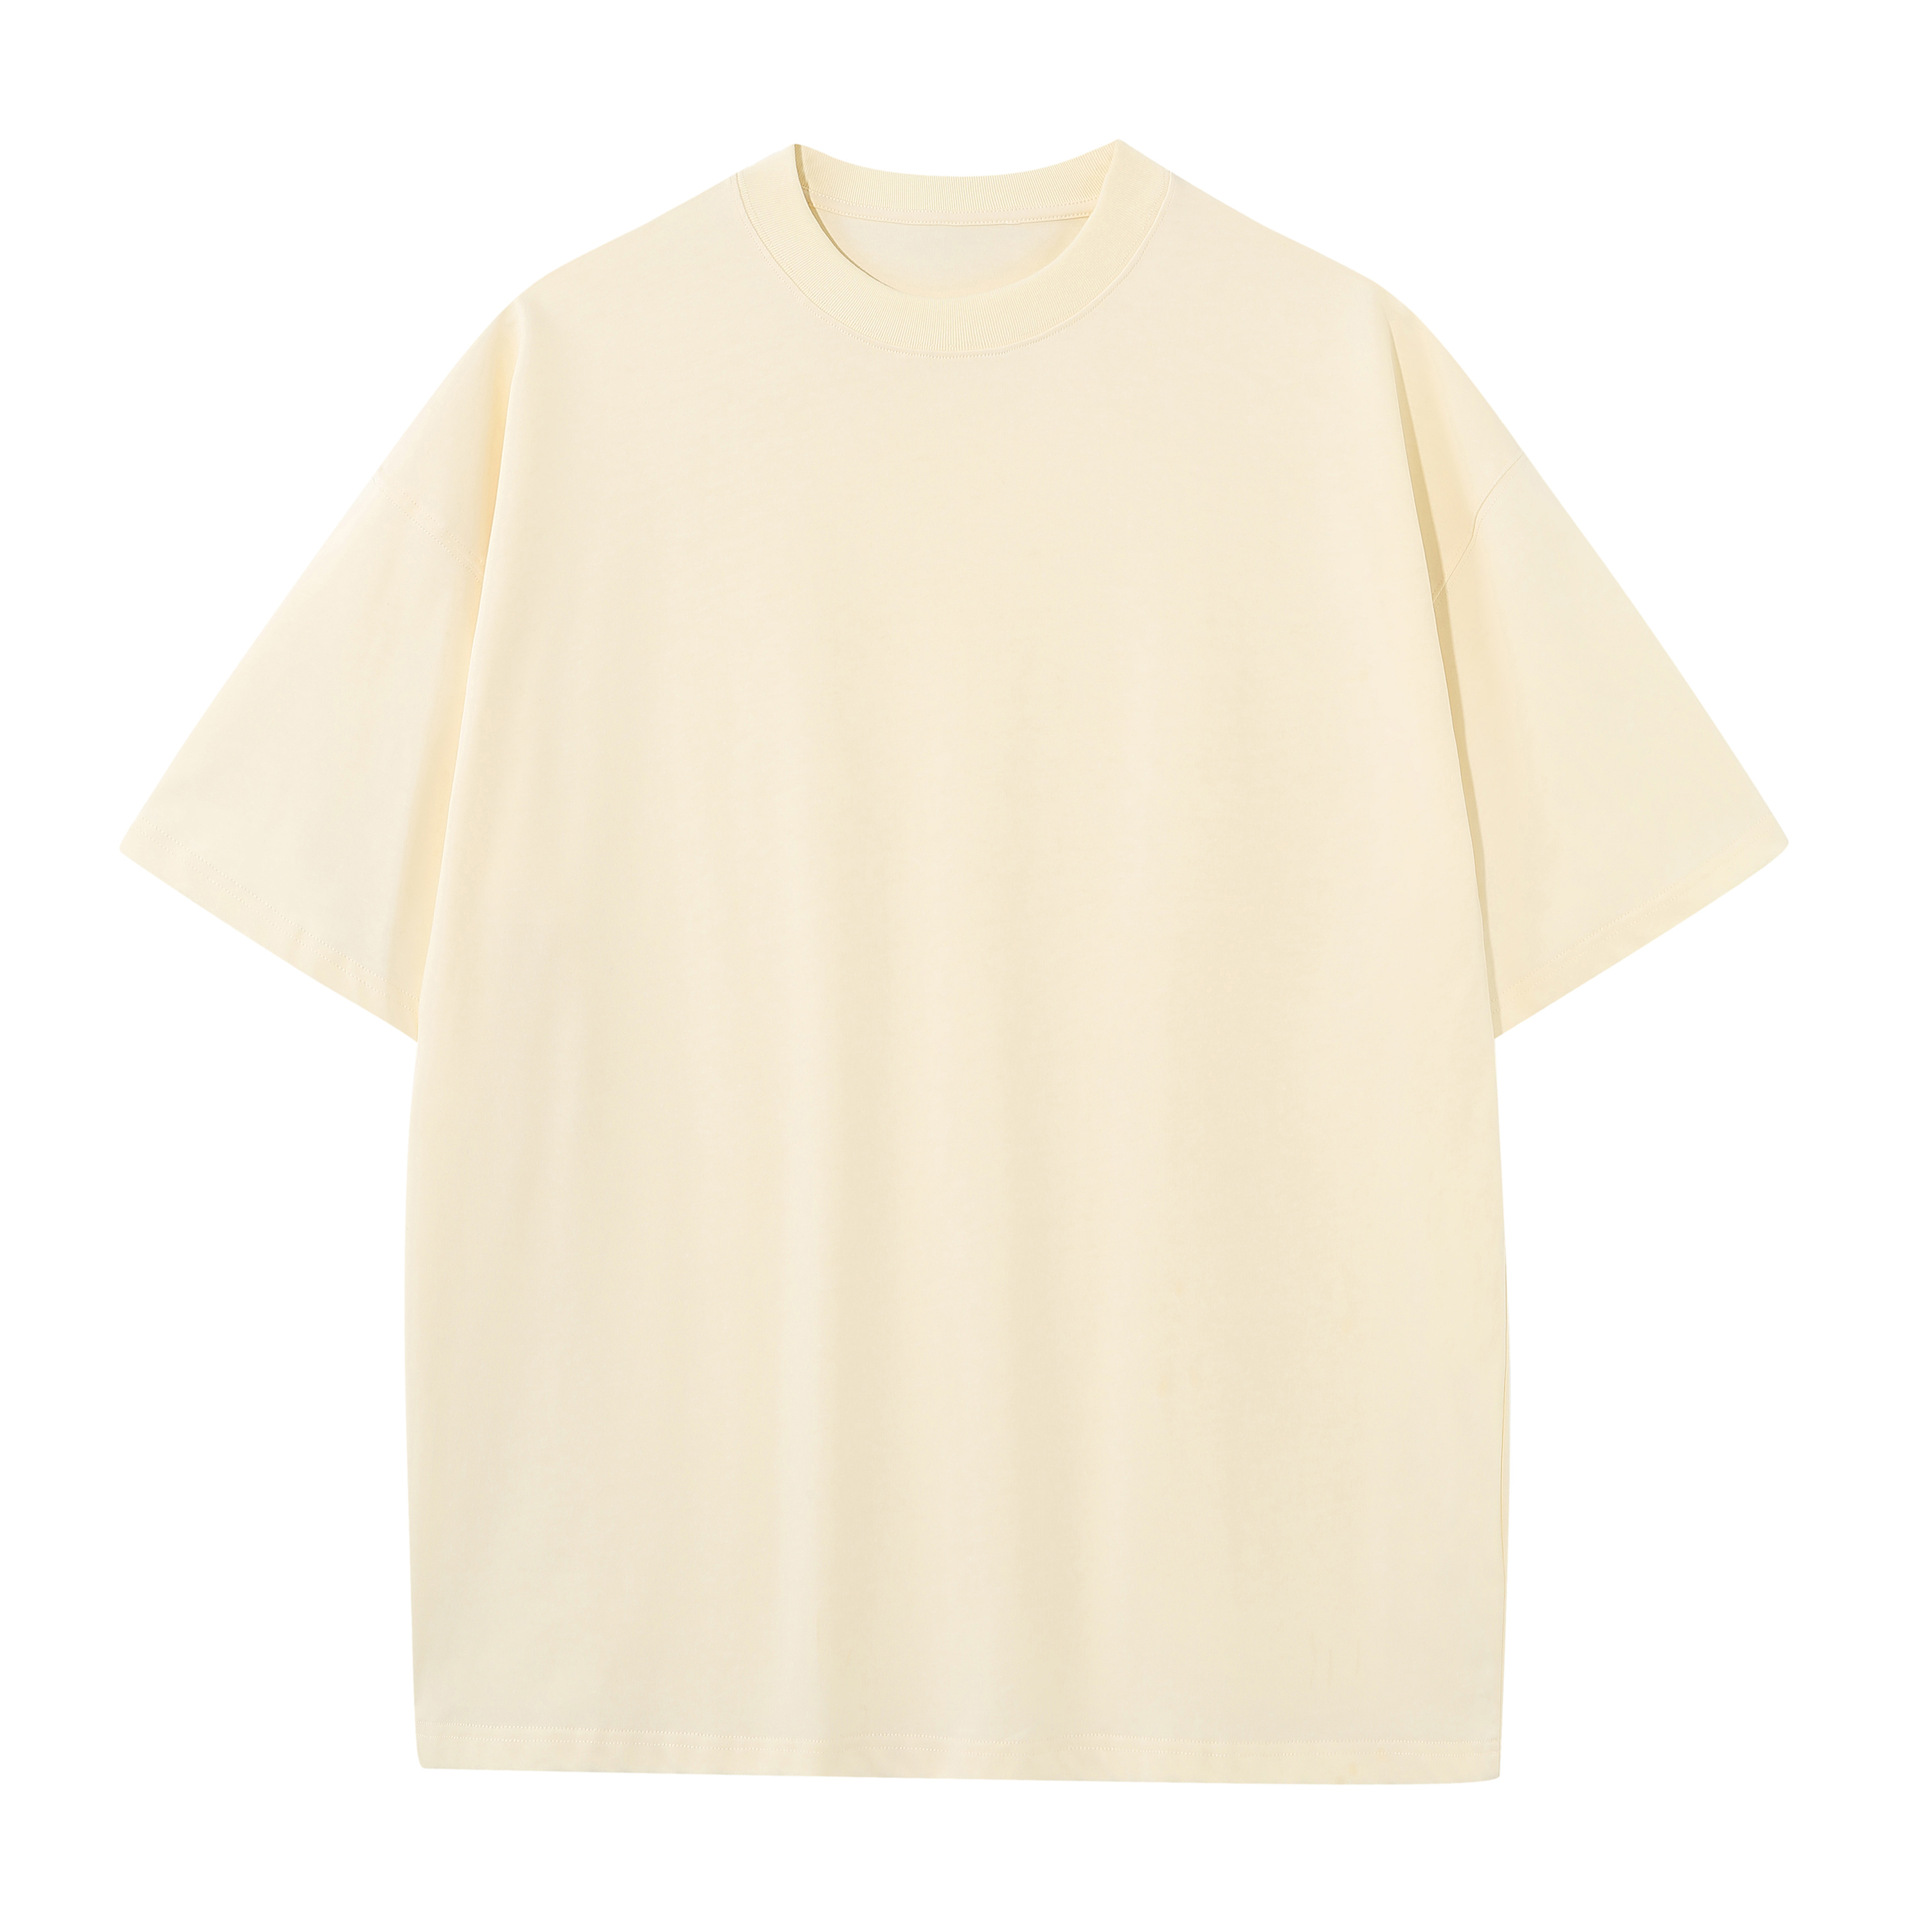 Letter Printed Mens Designer T Shirt Summer T-Shirt Tees Hip Hop Men Women Black White Short Sleeve Tees Size S-XXL